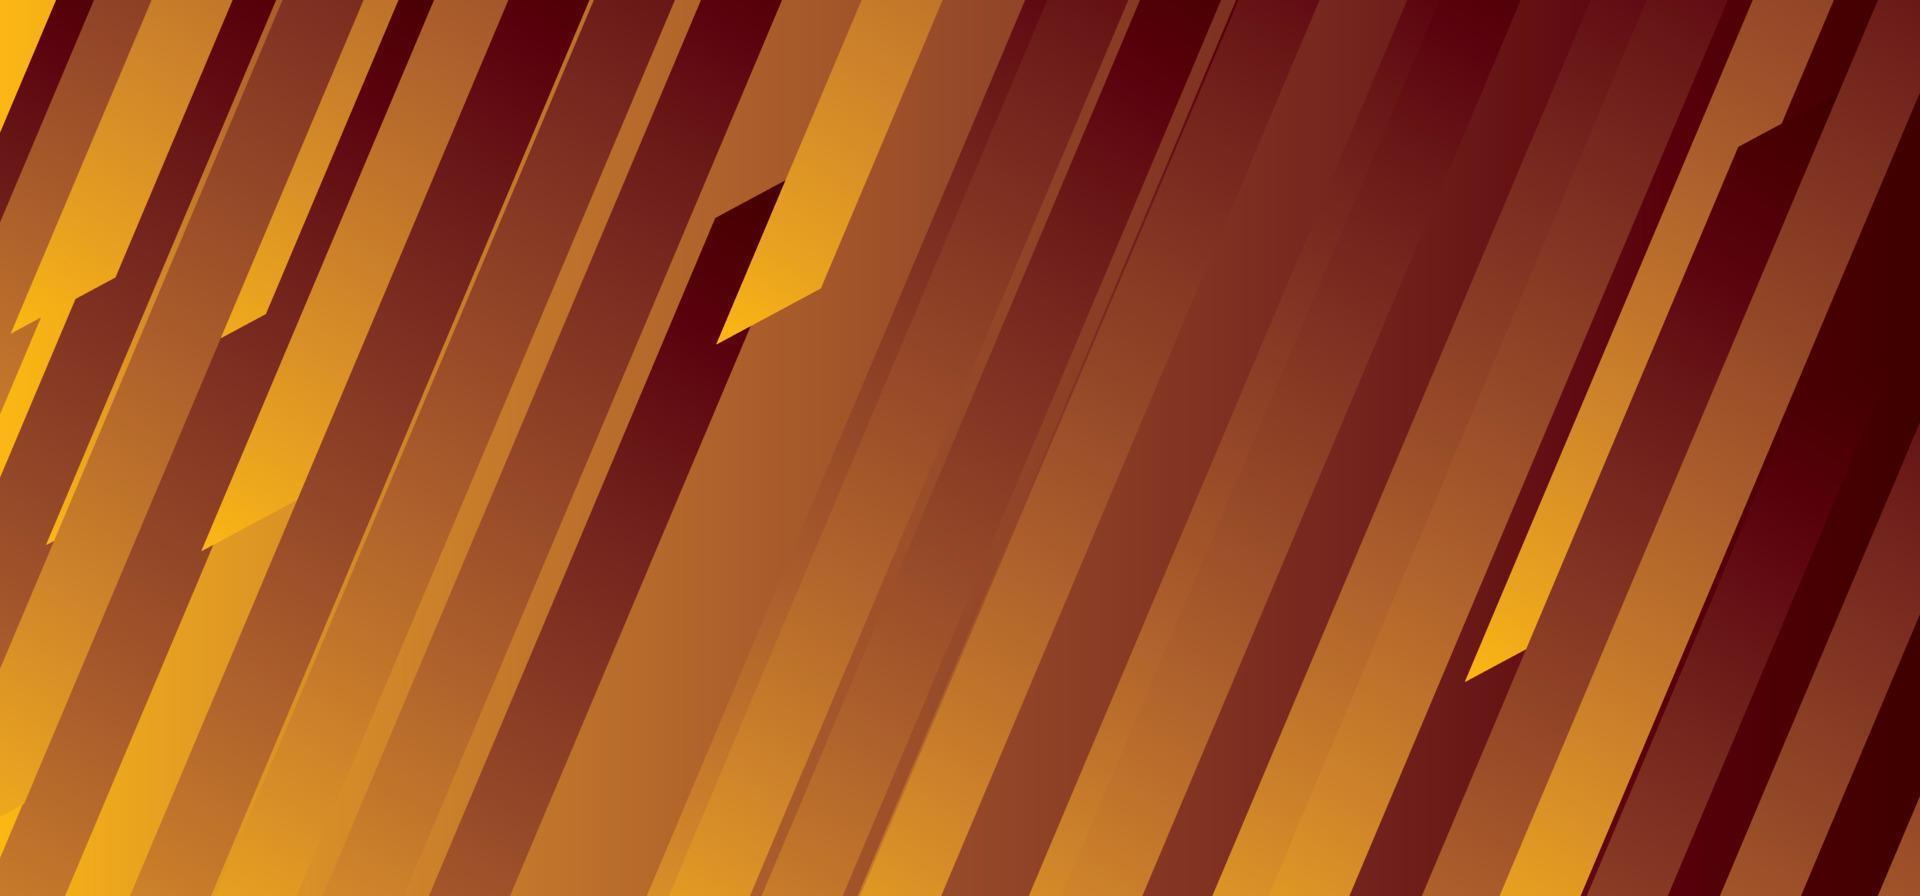 orange abstract geometric background vector